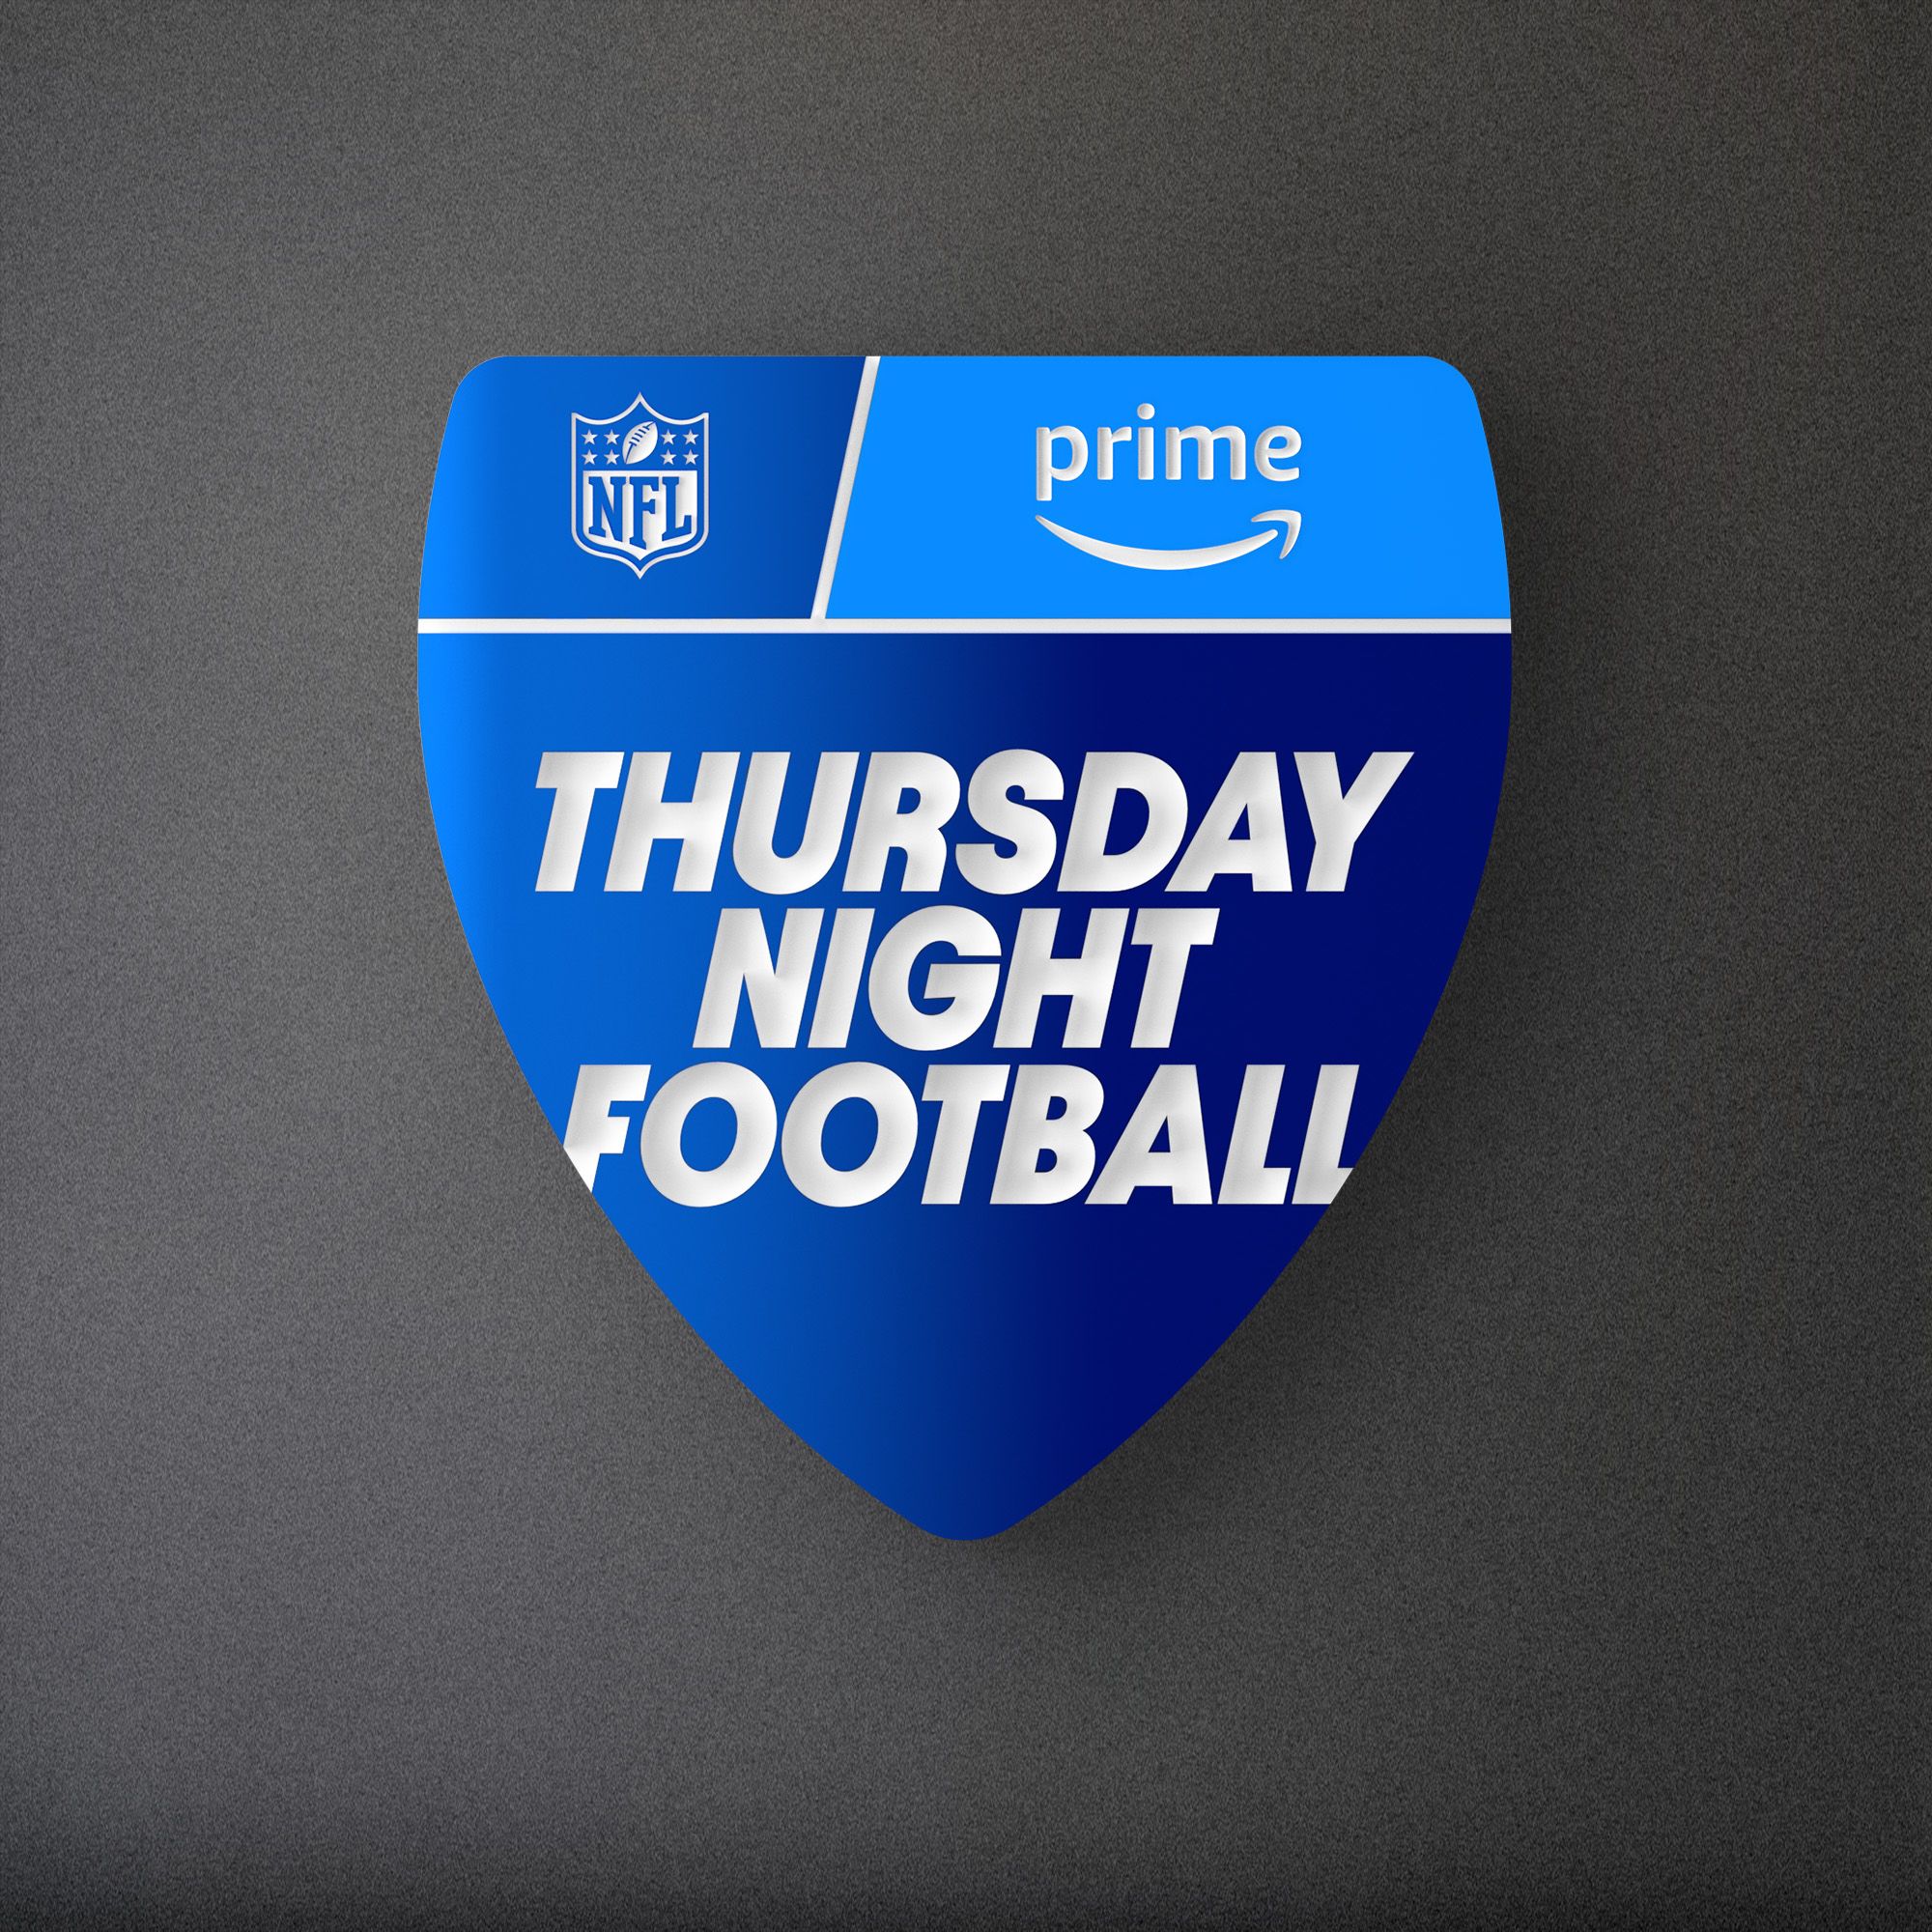 thursday night football schedule nfl com